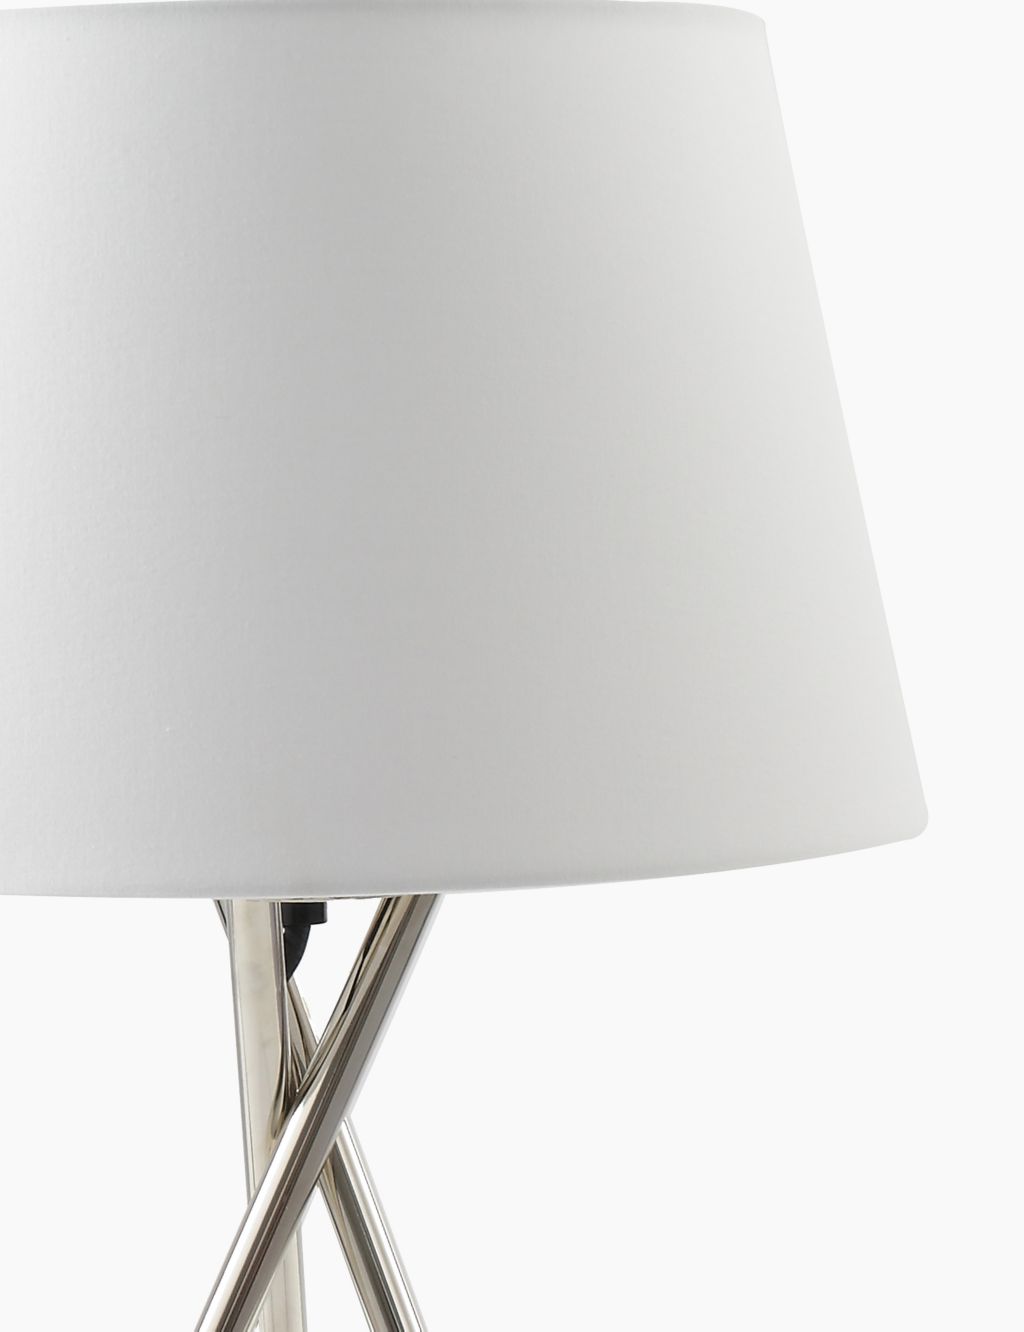 Alexa Table Lamp image 3